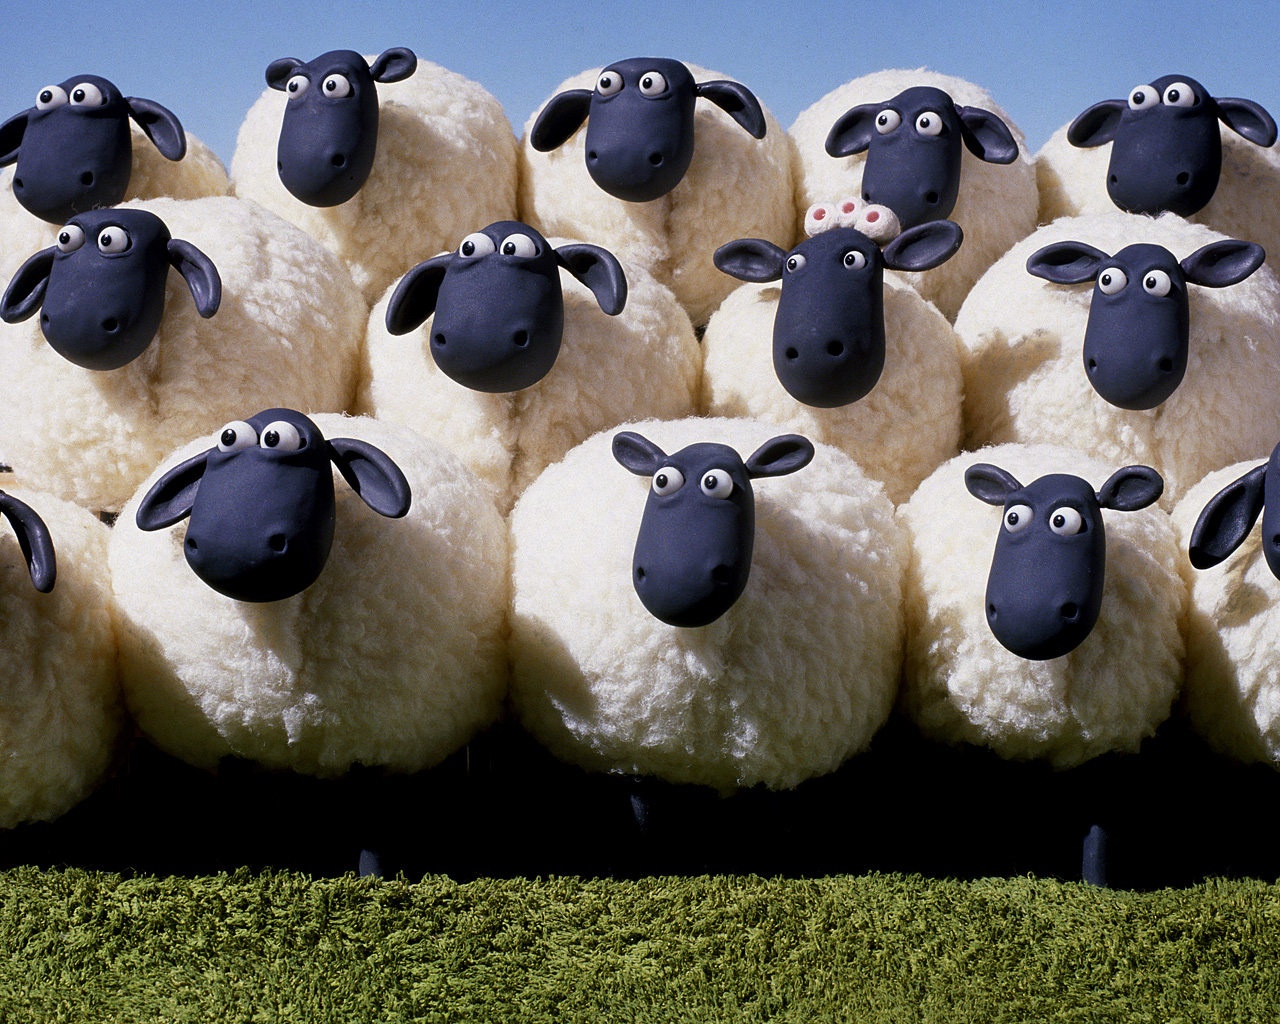 76+] Shaun The Sheep Wallpaper - WallpaperSafari